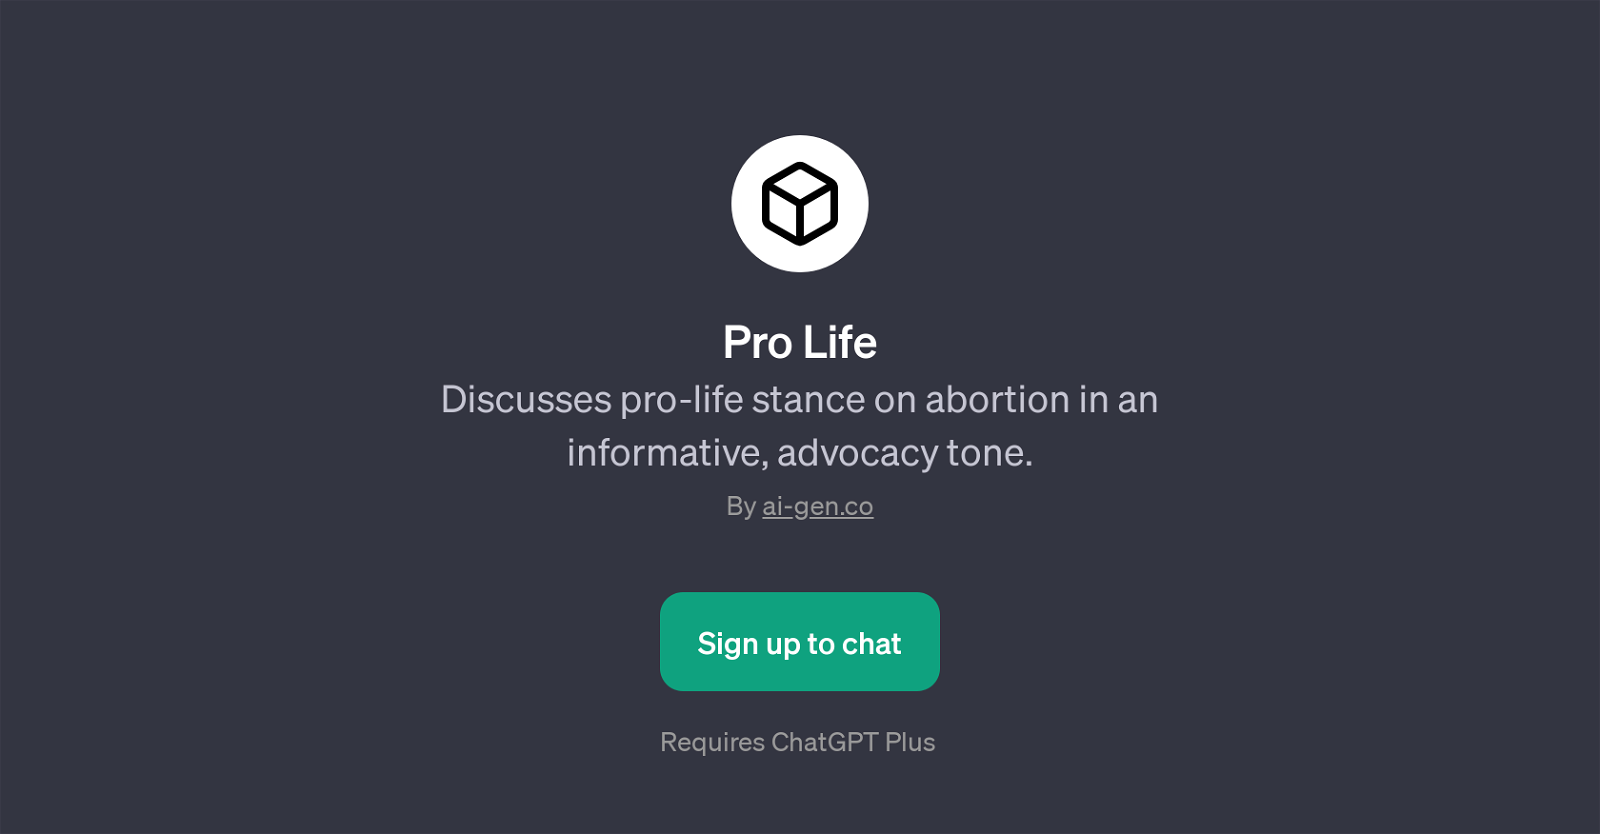 Pro Life website